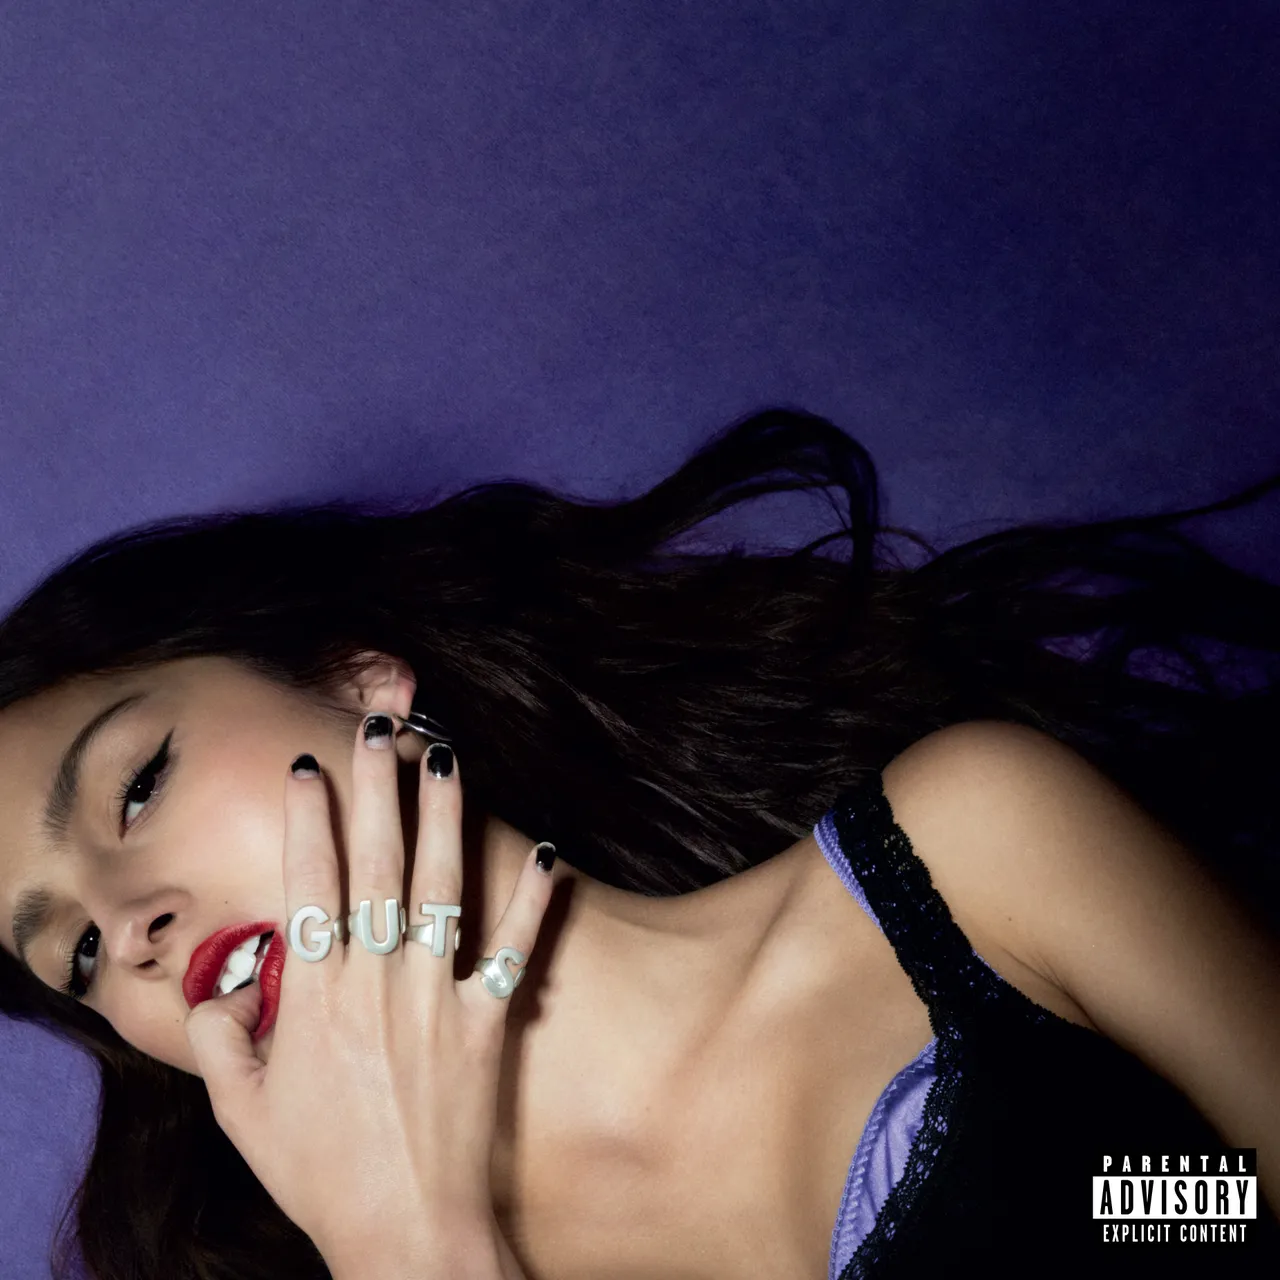 Olivia Rodrigo on the "GUTS" album cover.